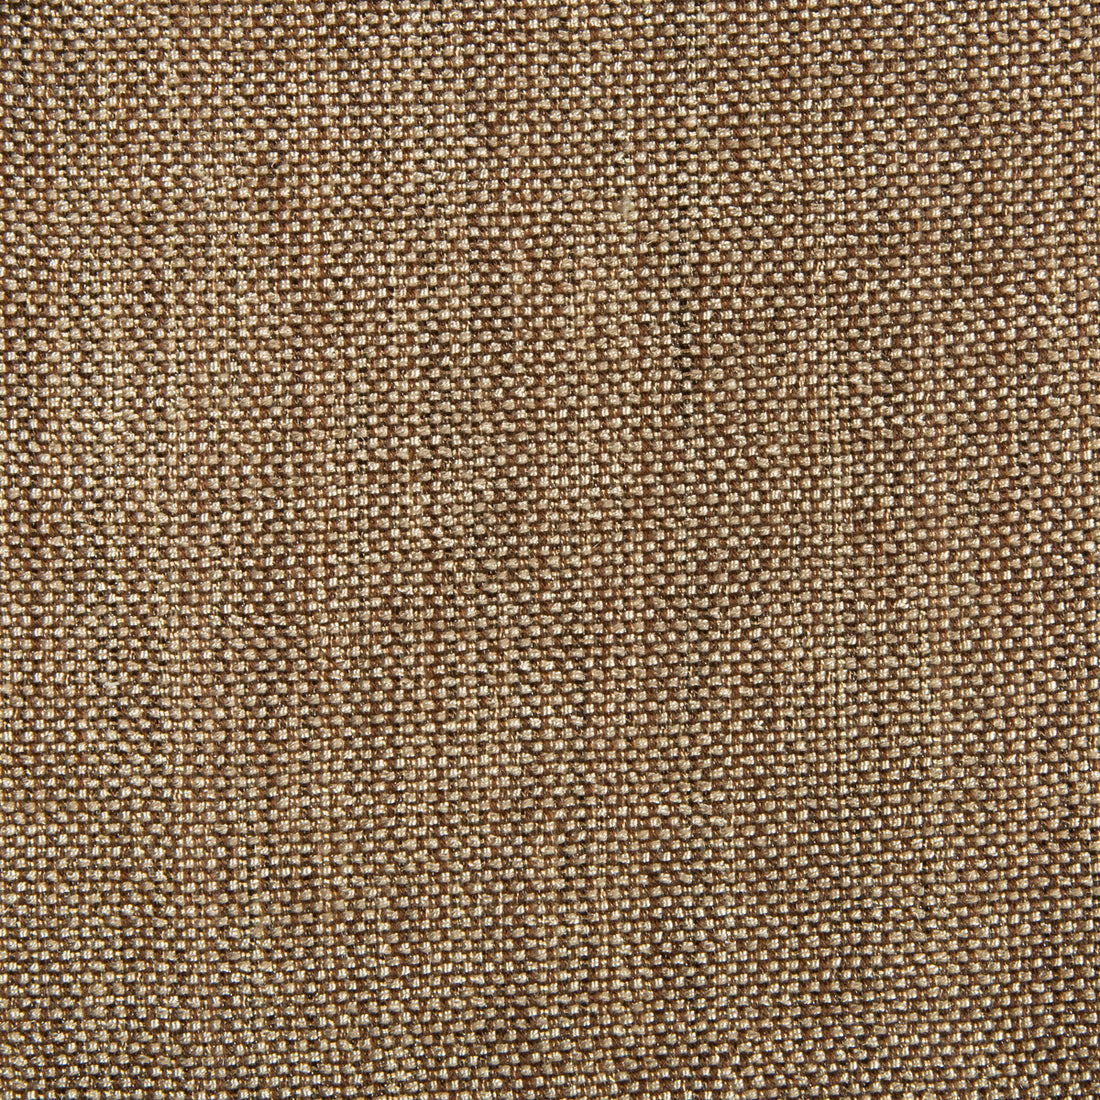 Kravet Smart fabric in 34939-606 color - pattern 34939.606.0 - by Kravet Smart